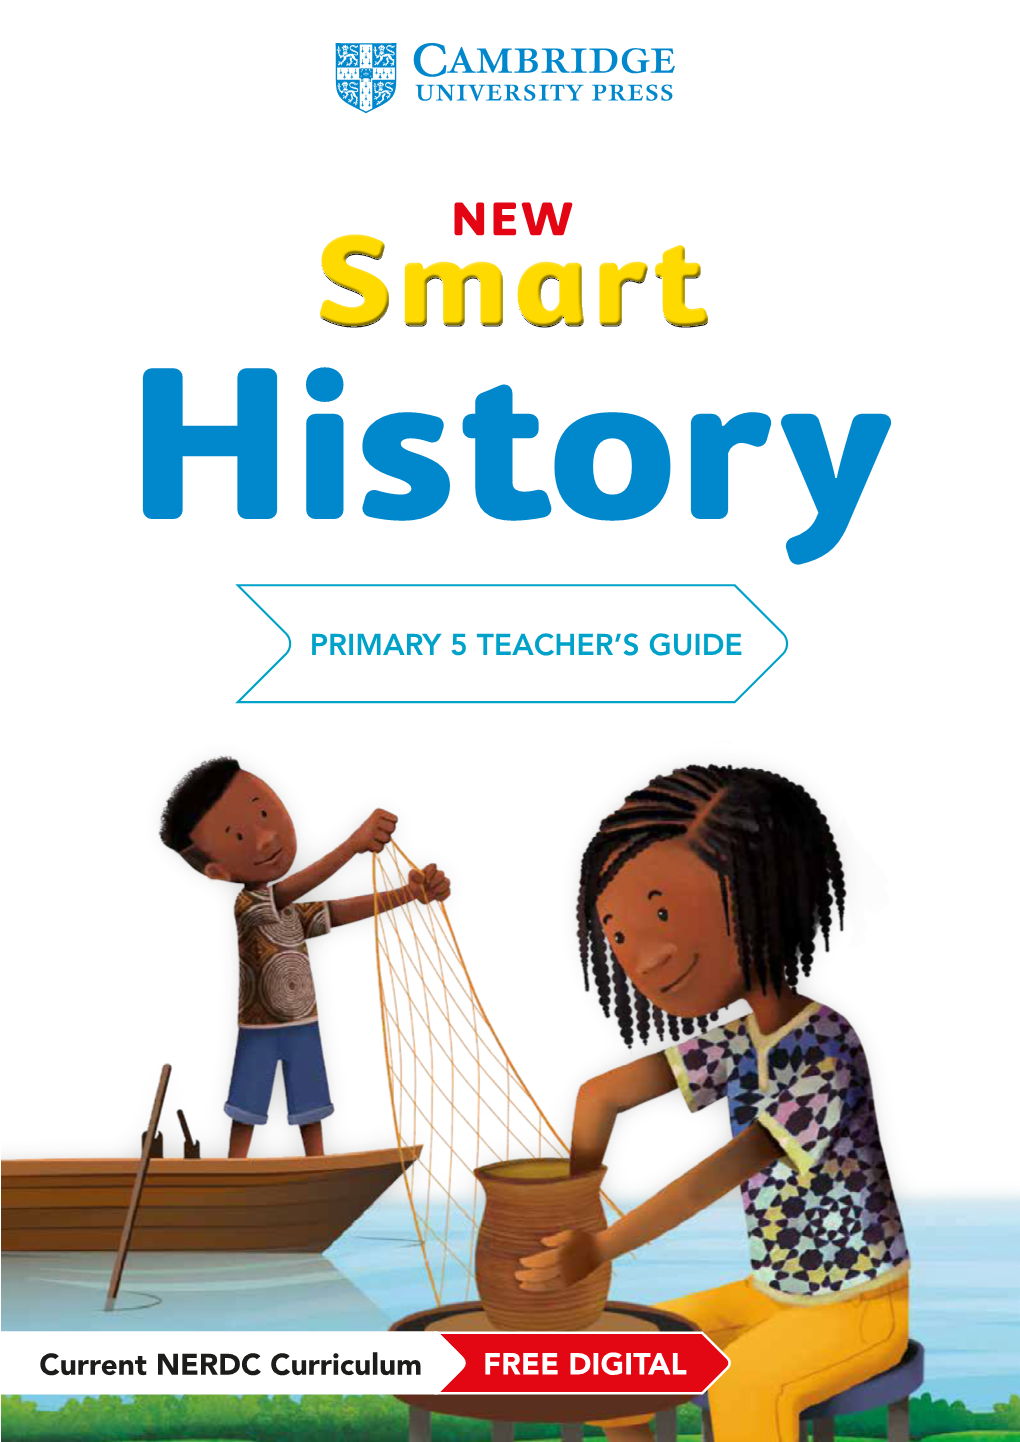 New Smart History Primary 5 Teacher's Guide